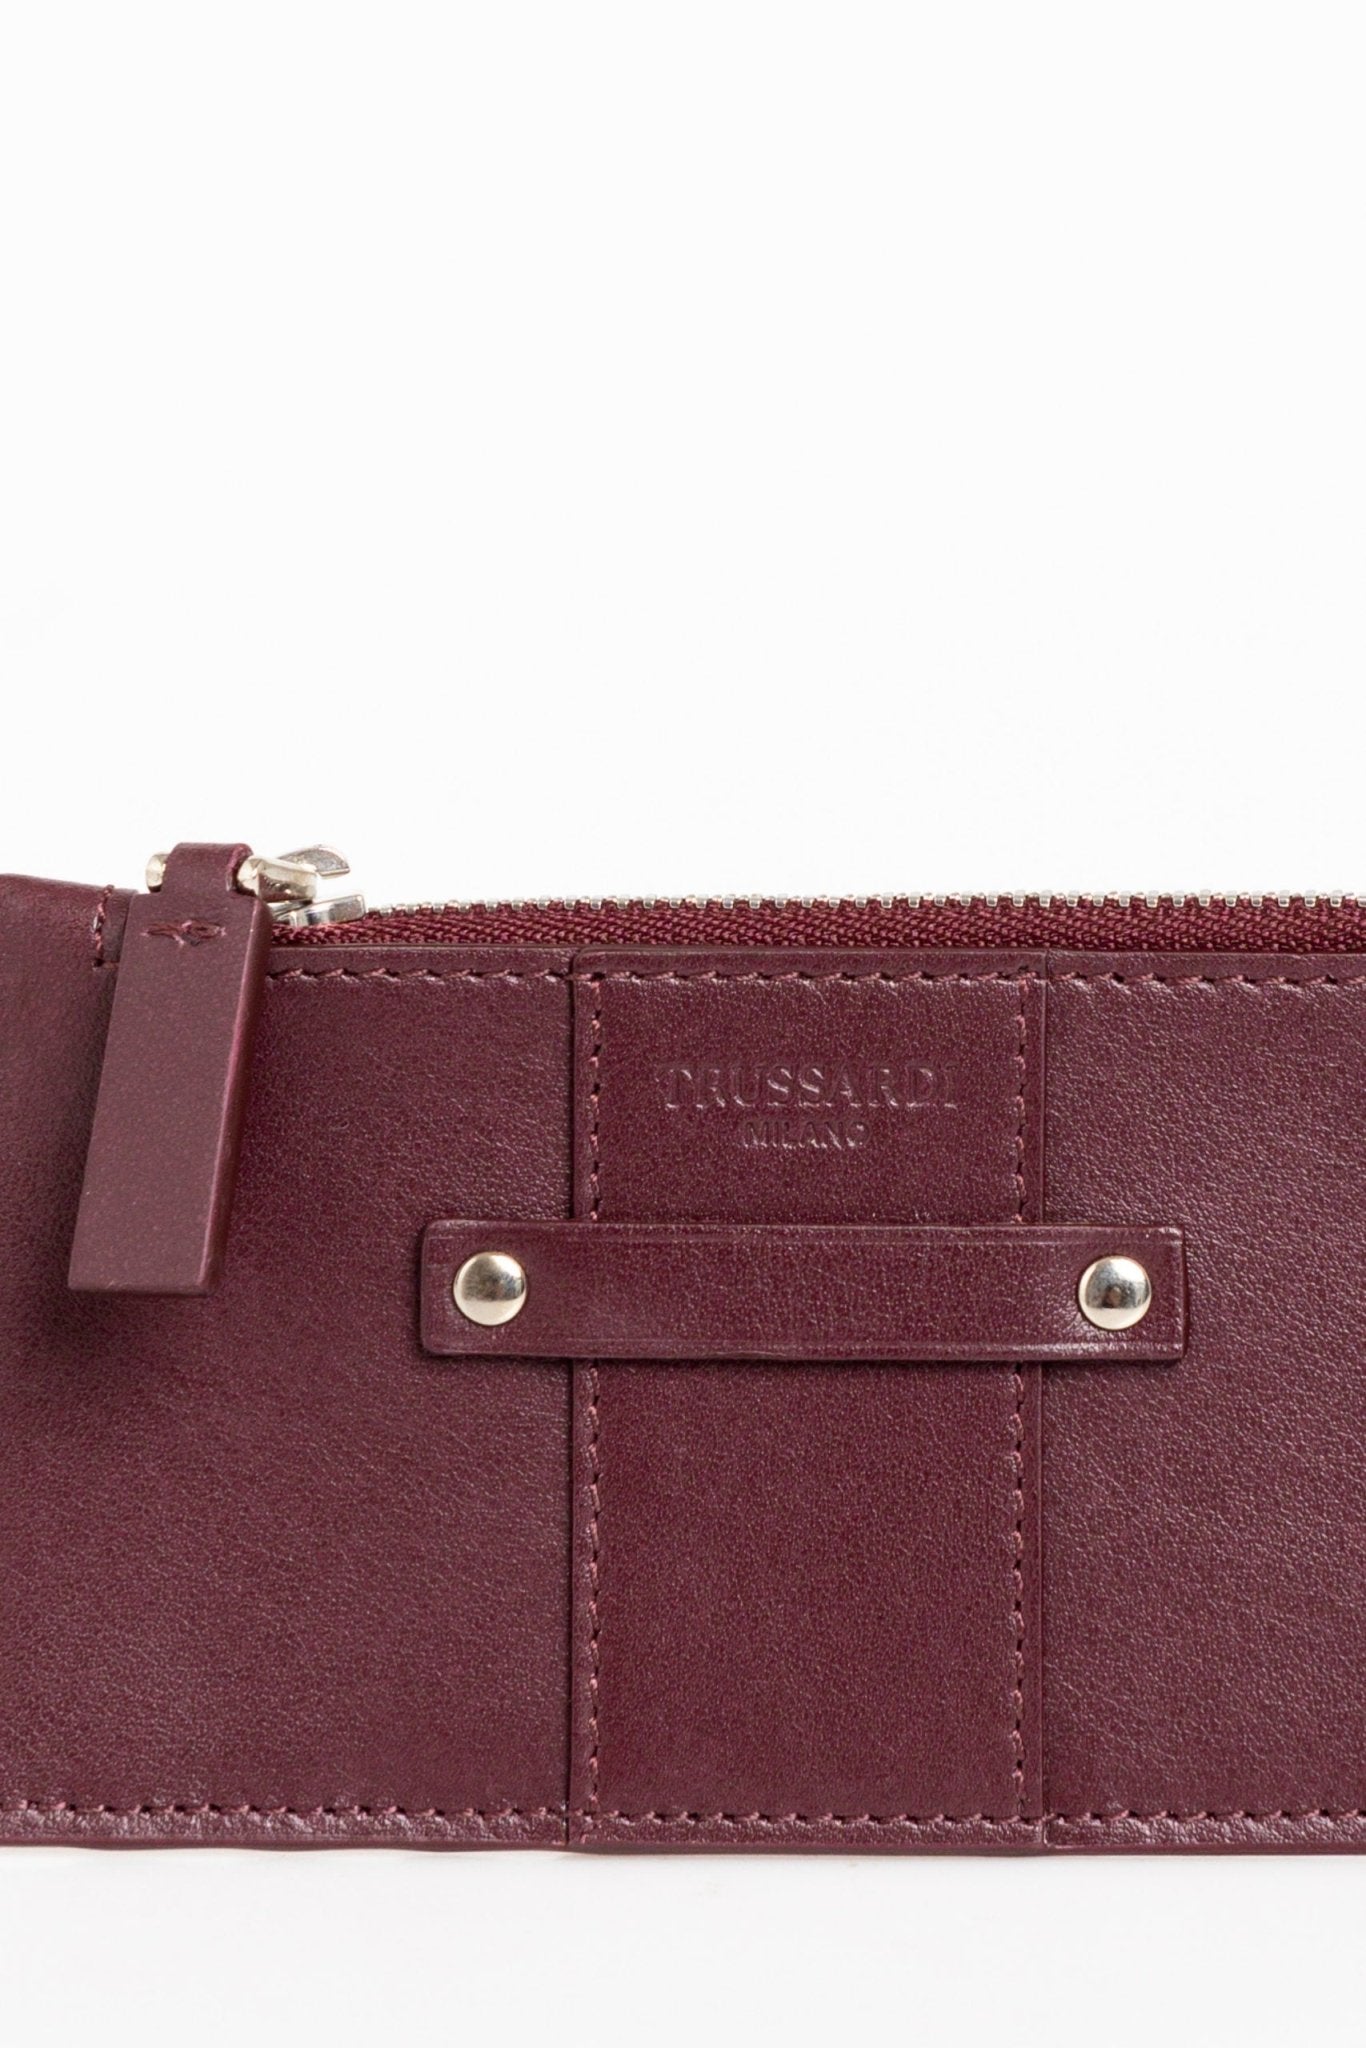 Trussardi Brown Leather Wallet - Fizigo